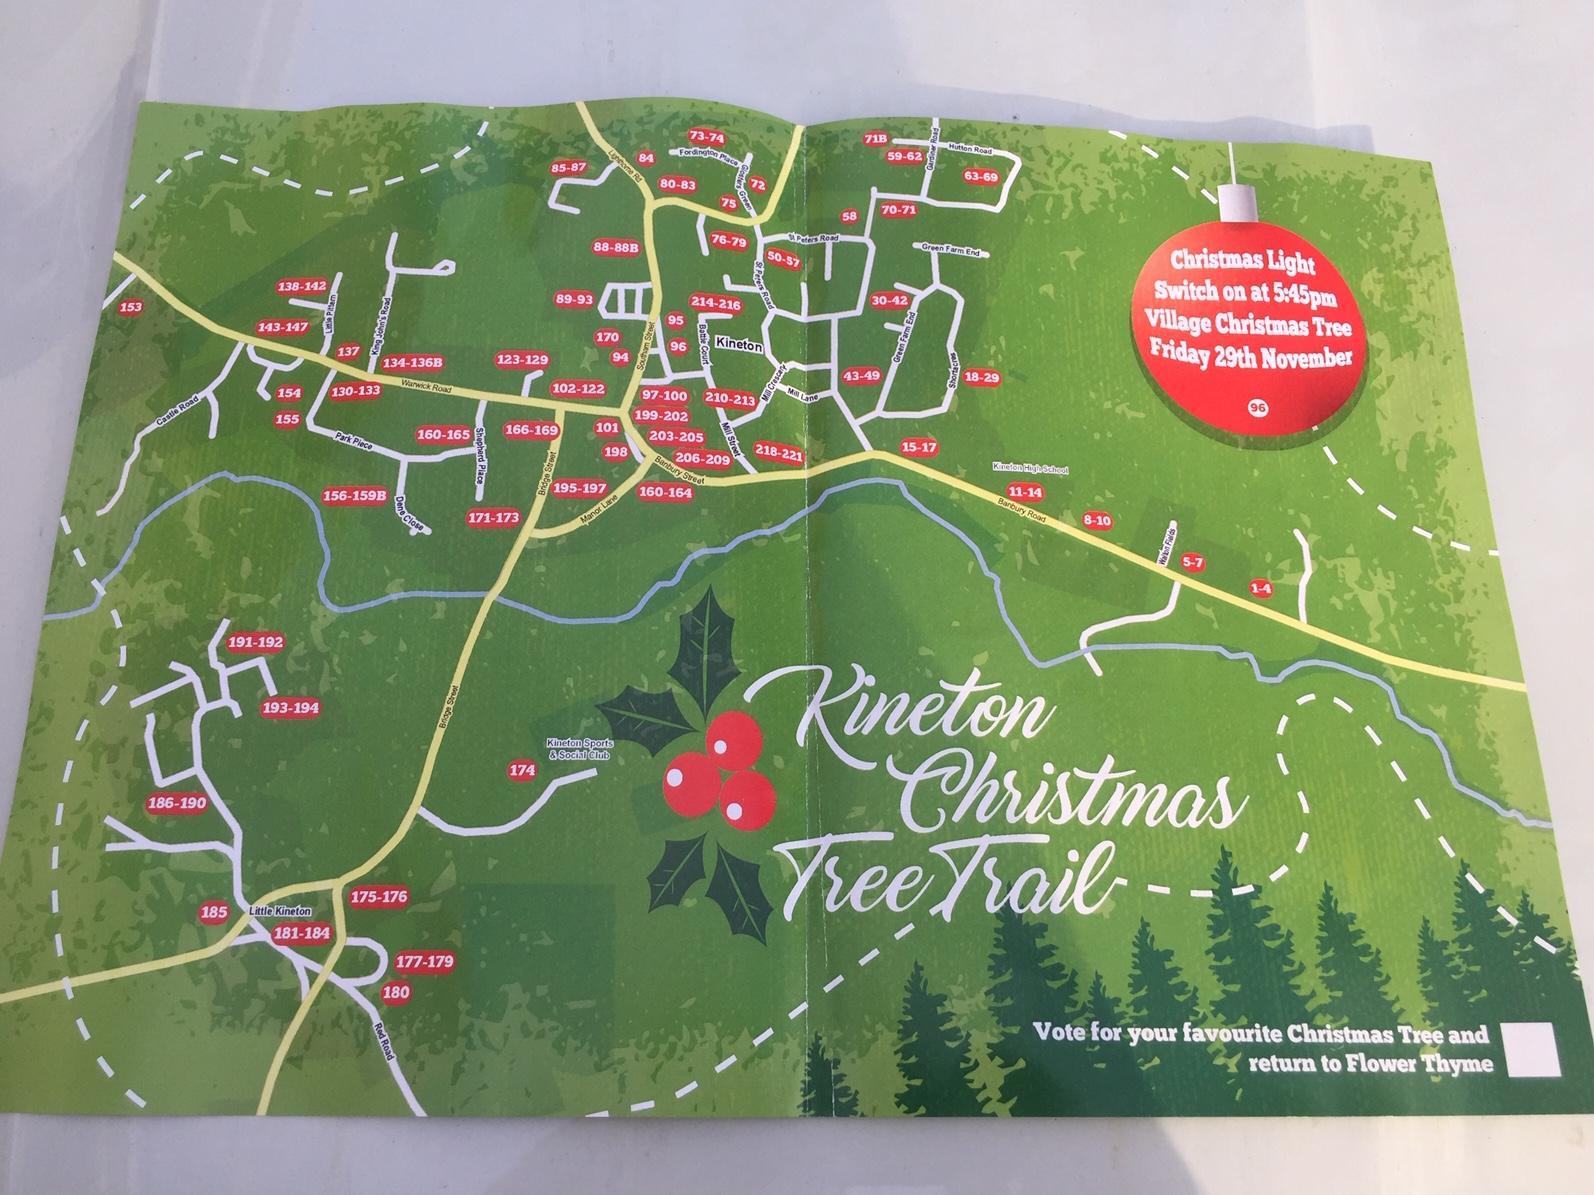 Map for the Kineton Christmas Tree Trail